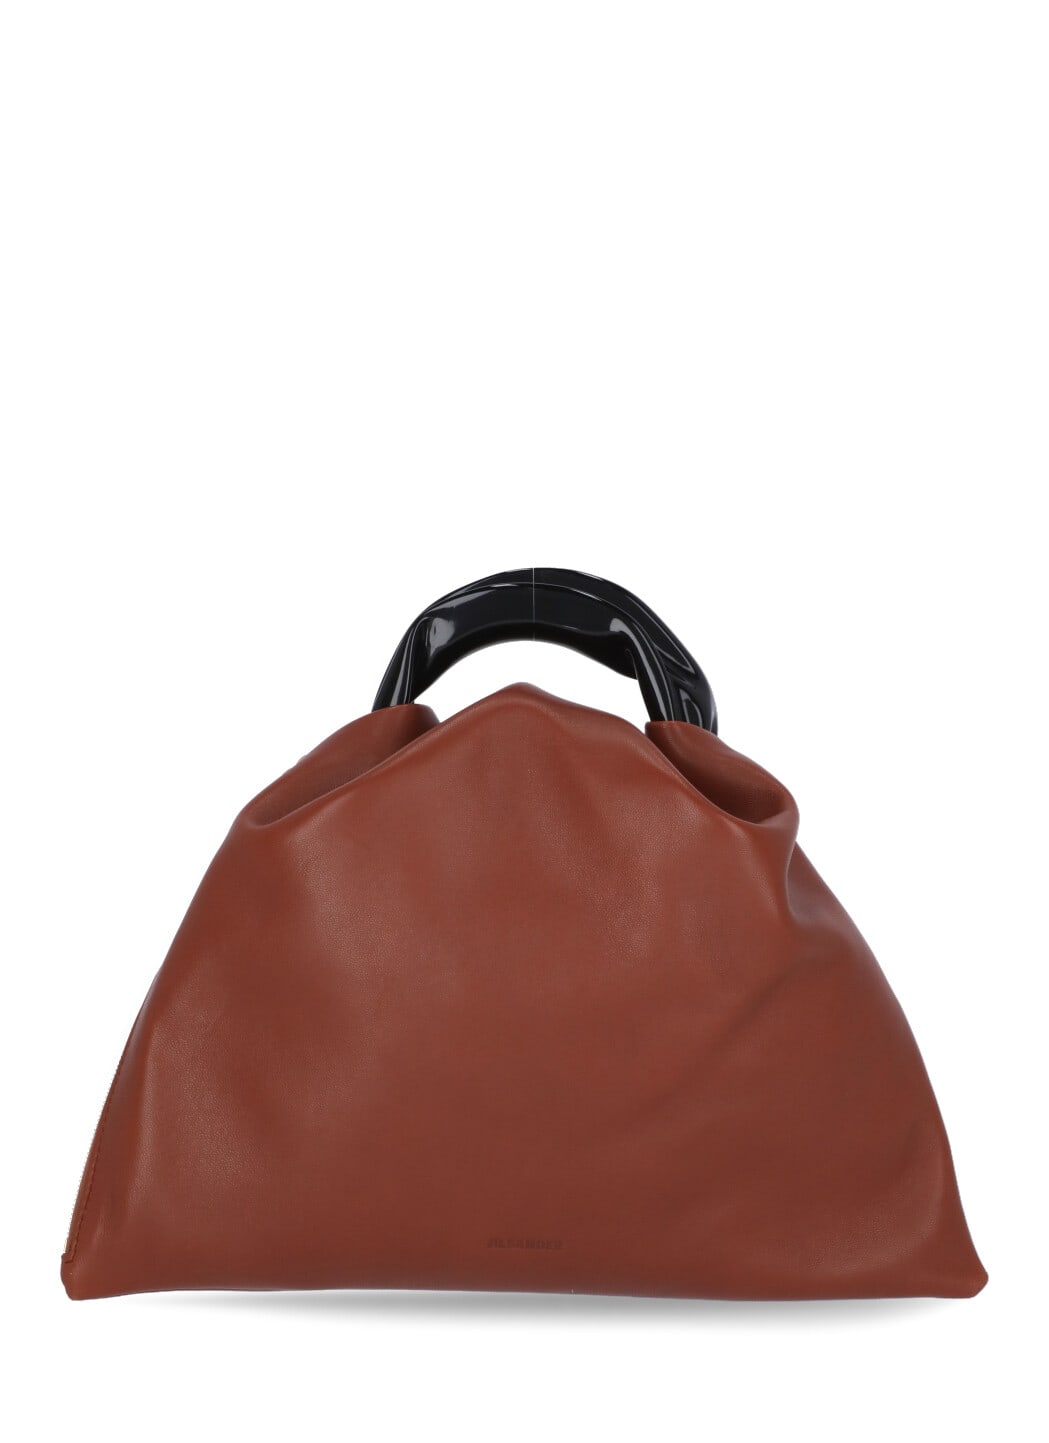 Jil Sander Brown Leather Handbag